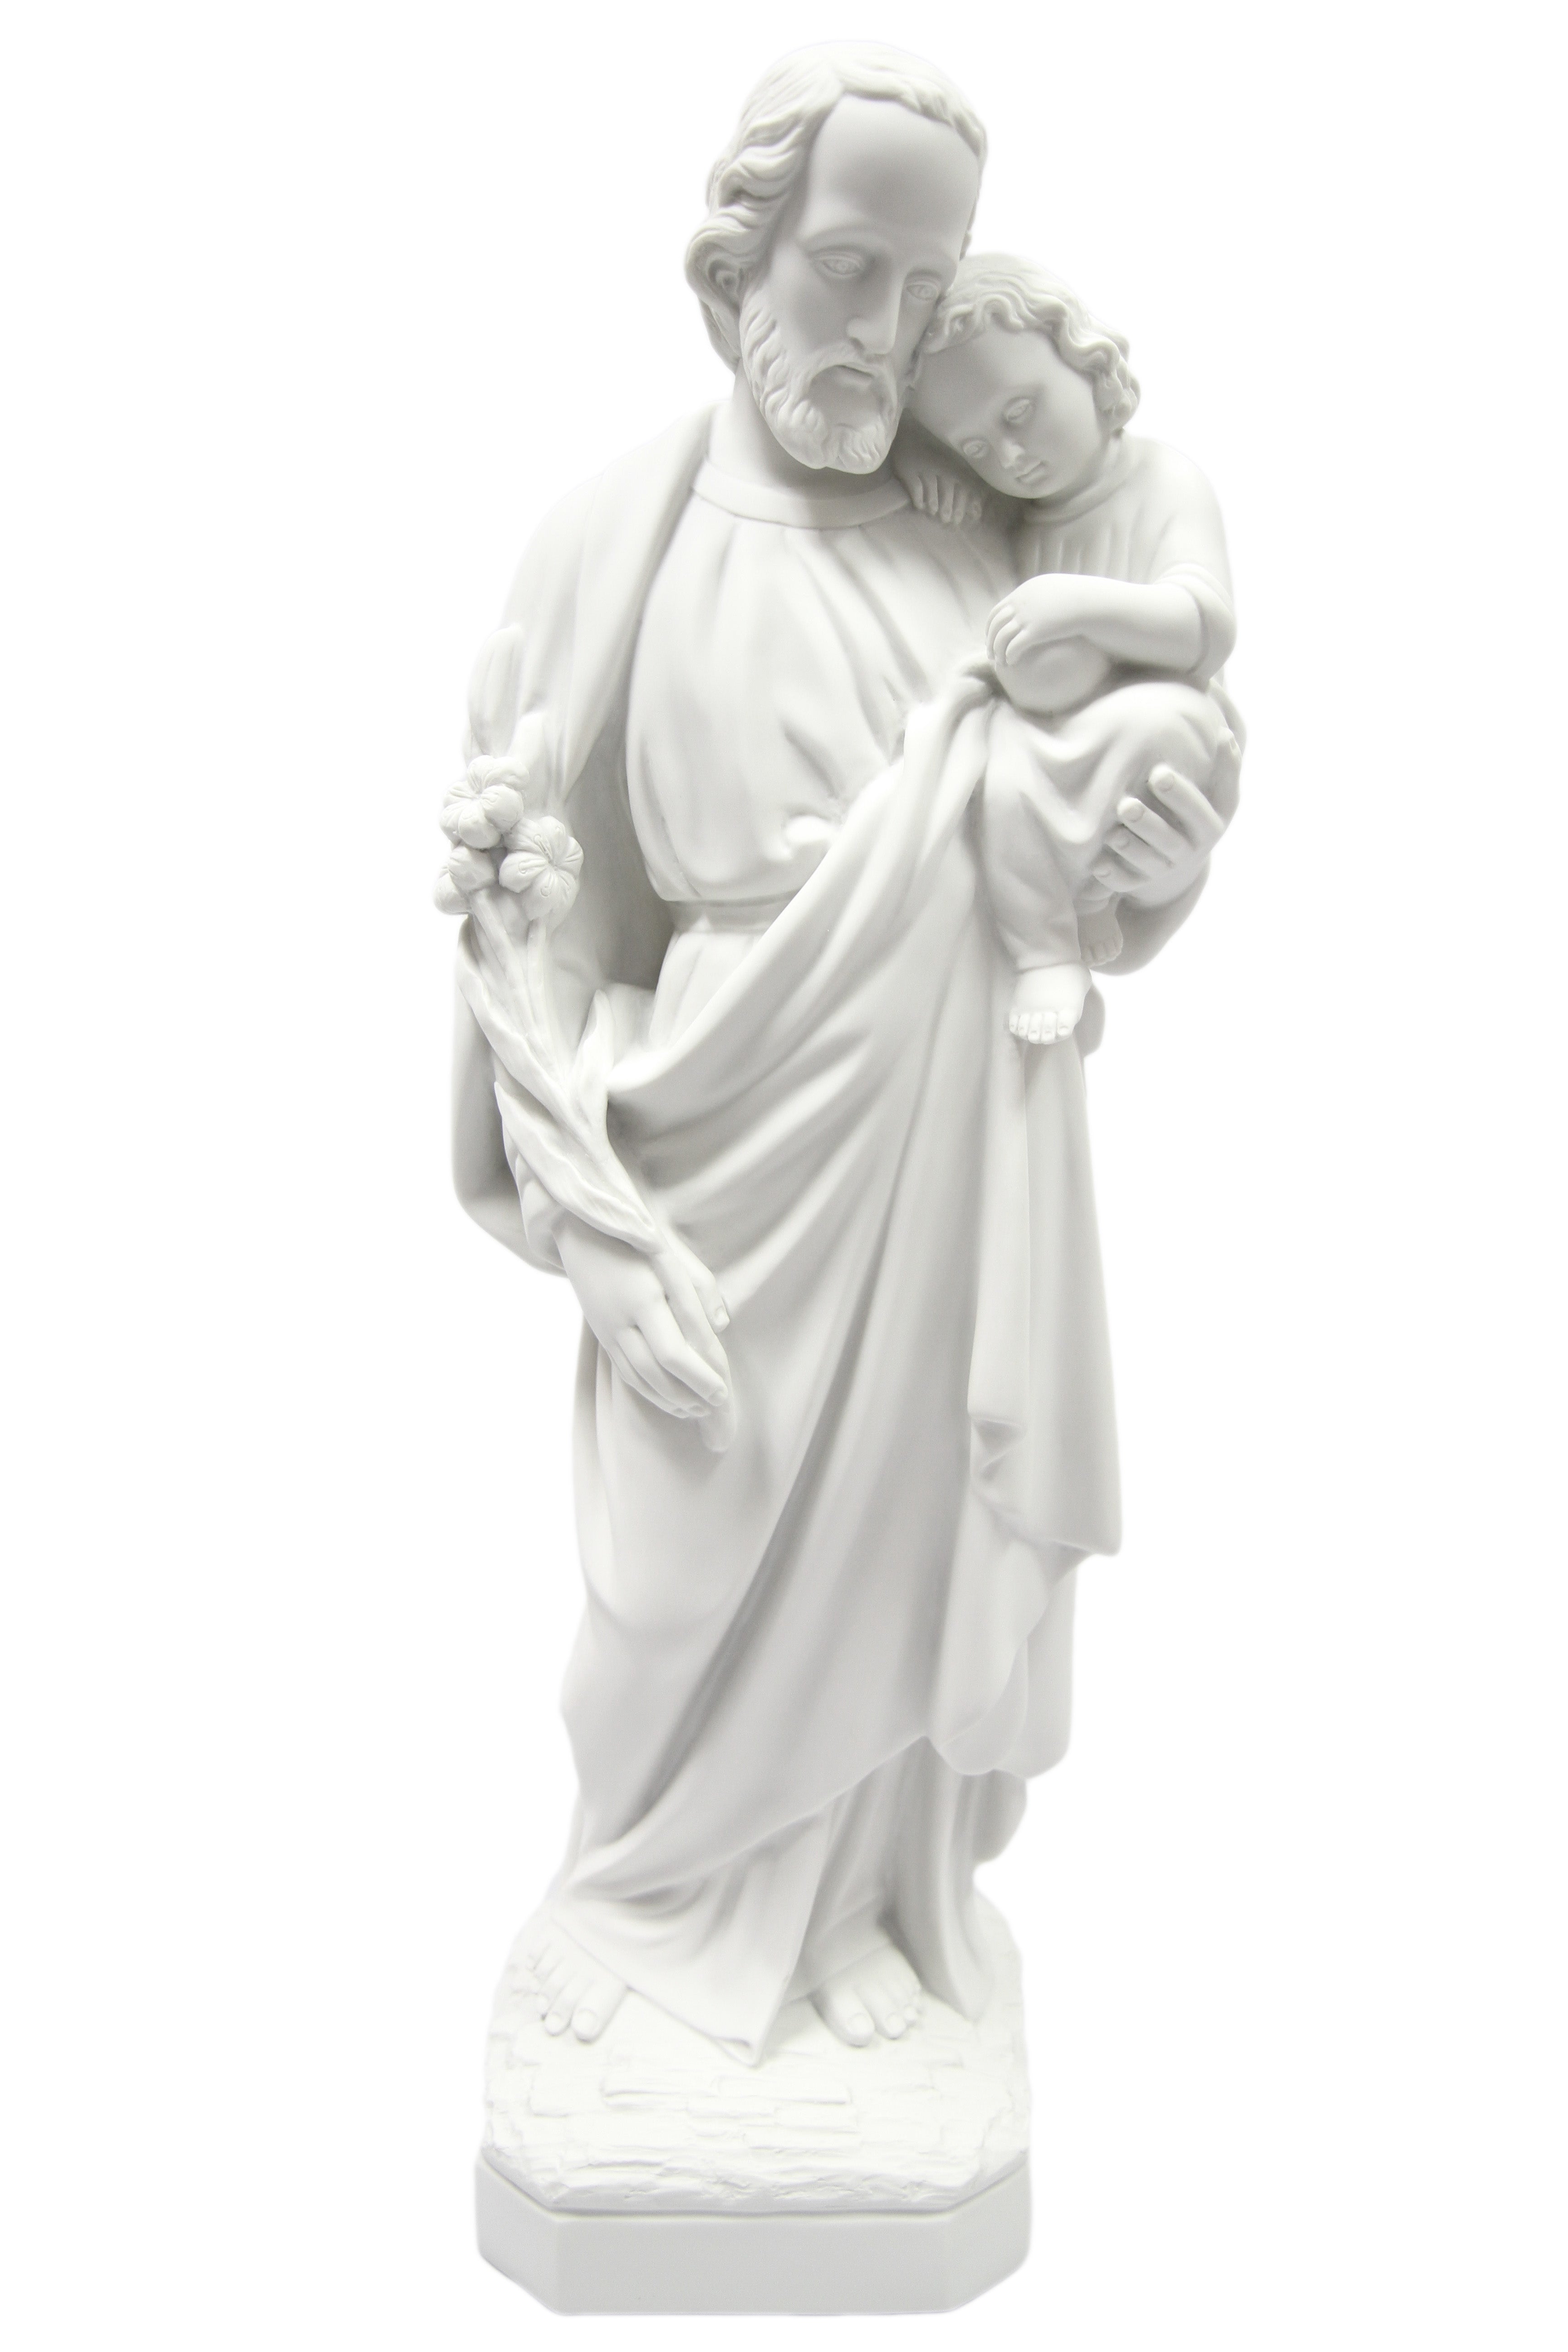 23.5" Saint Joseph with Baby Jesus Catholic Religious Statue Vittoria Collection Made in Italy